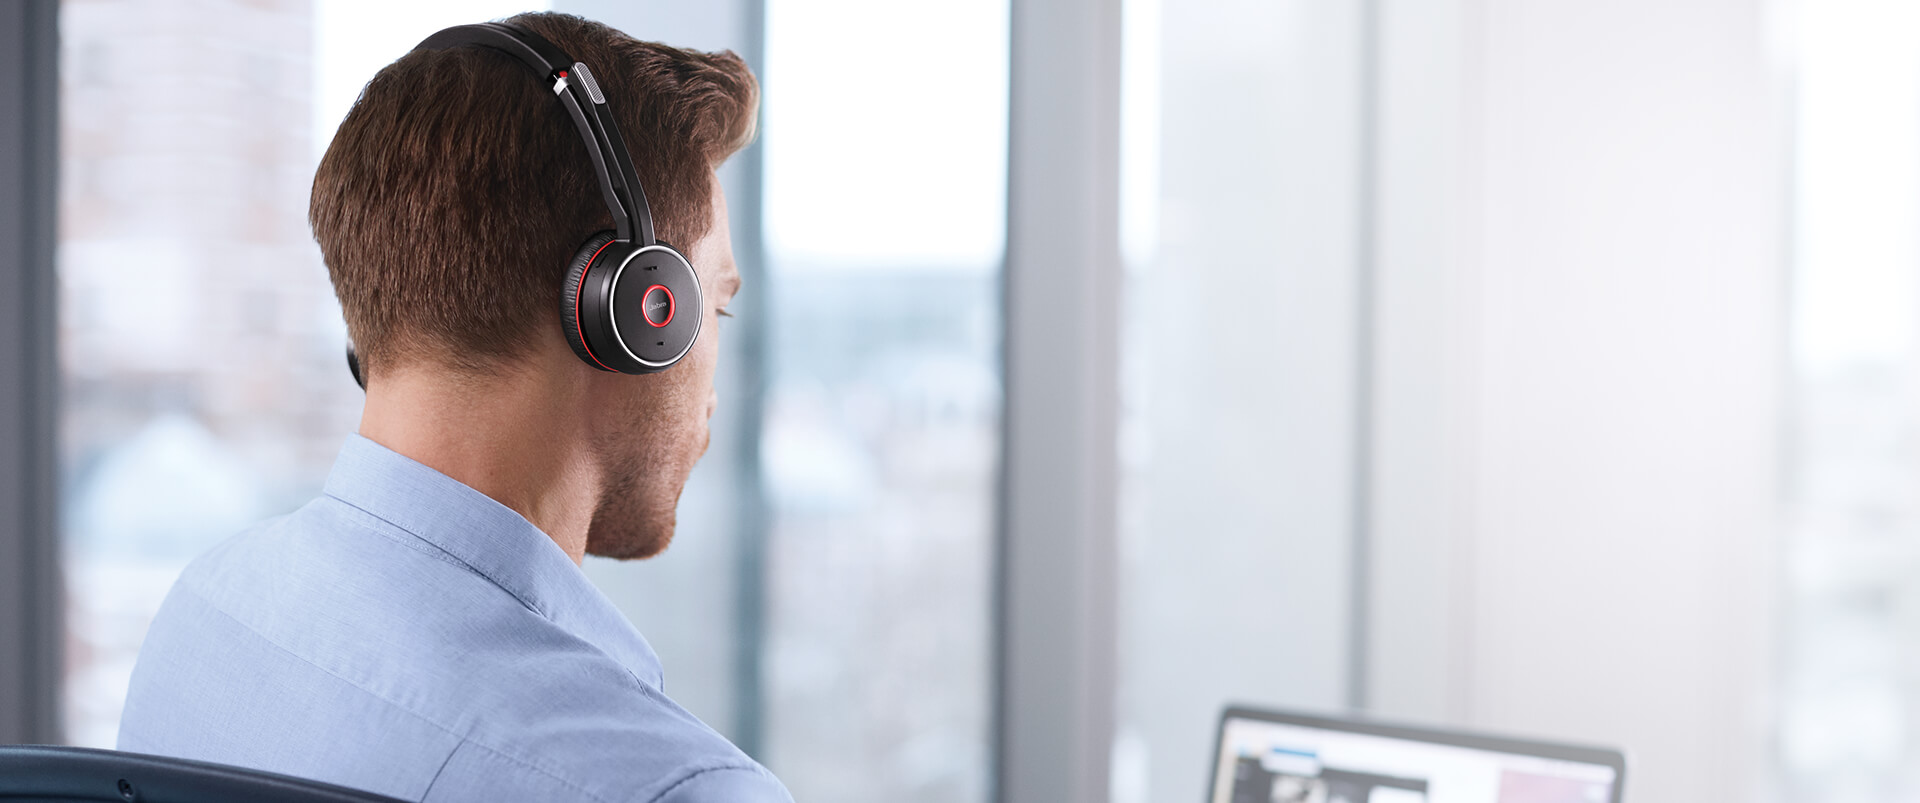 Jabra Evolve 75 Headphones Reduce Open Office Distractions [Review]